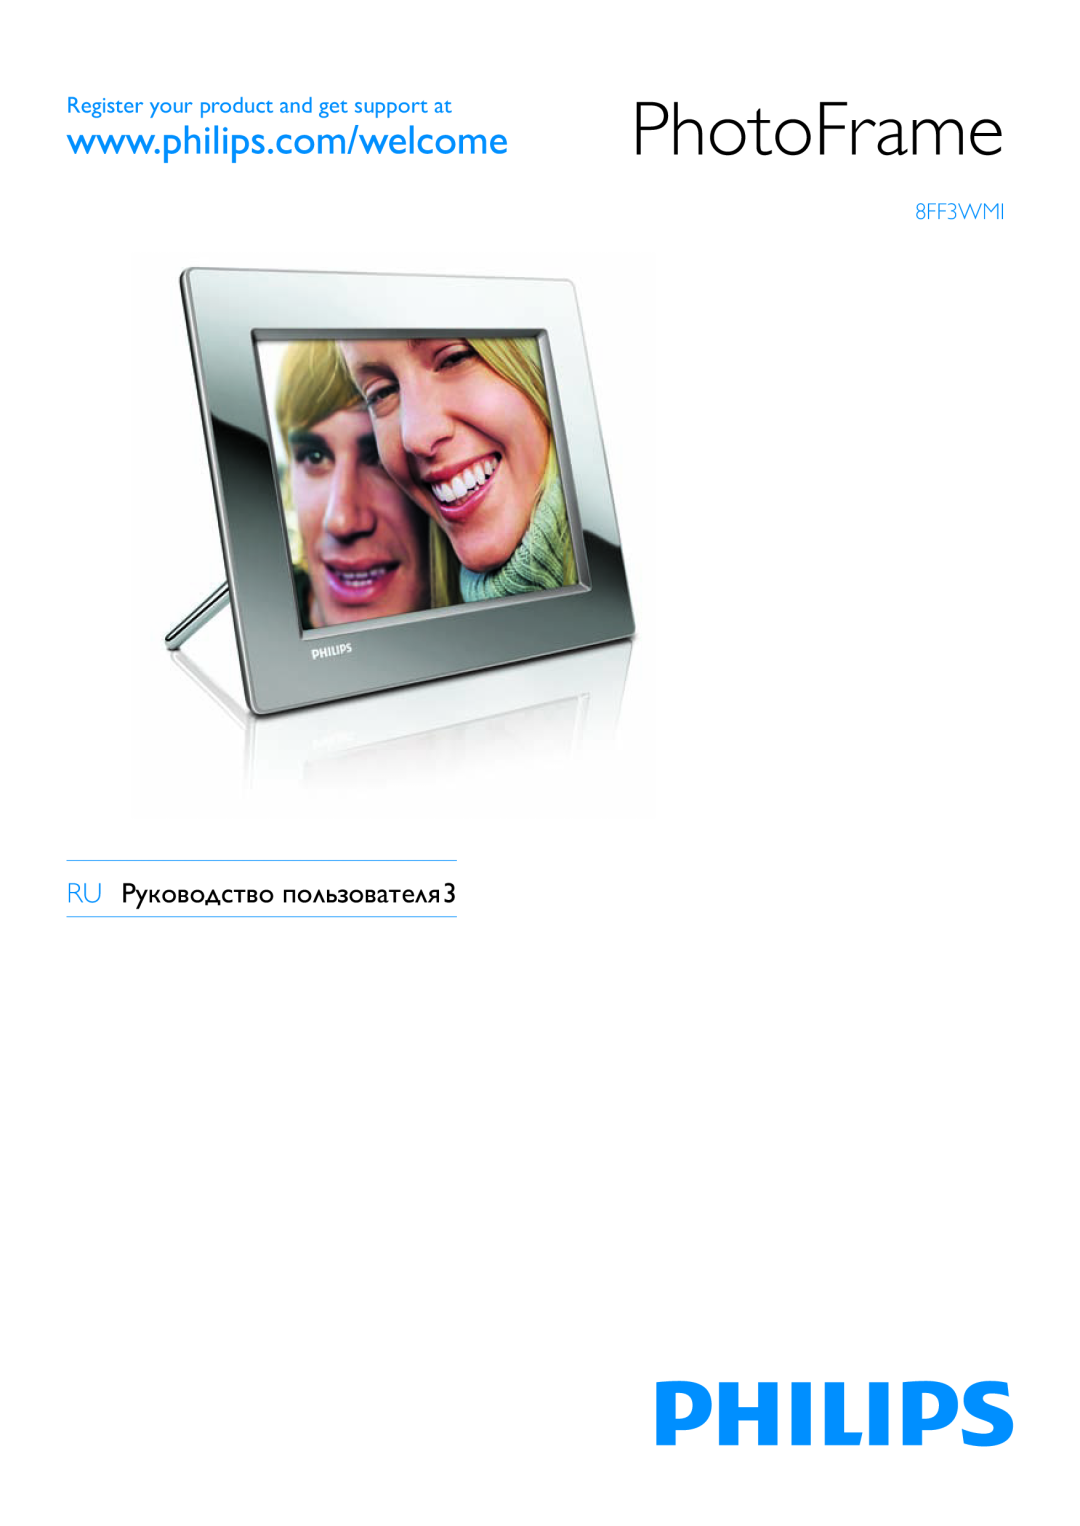 Philips 8FF3WMI manual PhotoFrame, SV Användarhandbok, Register your product and get support at 